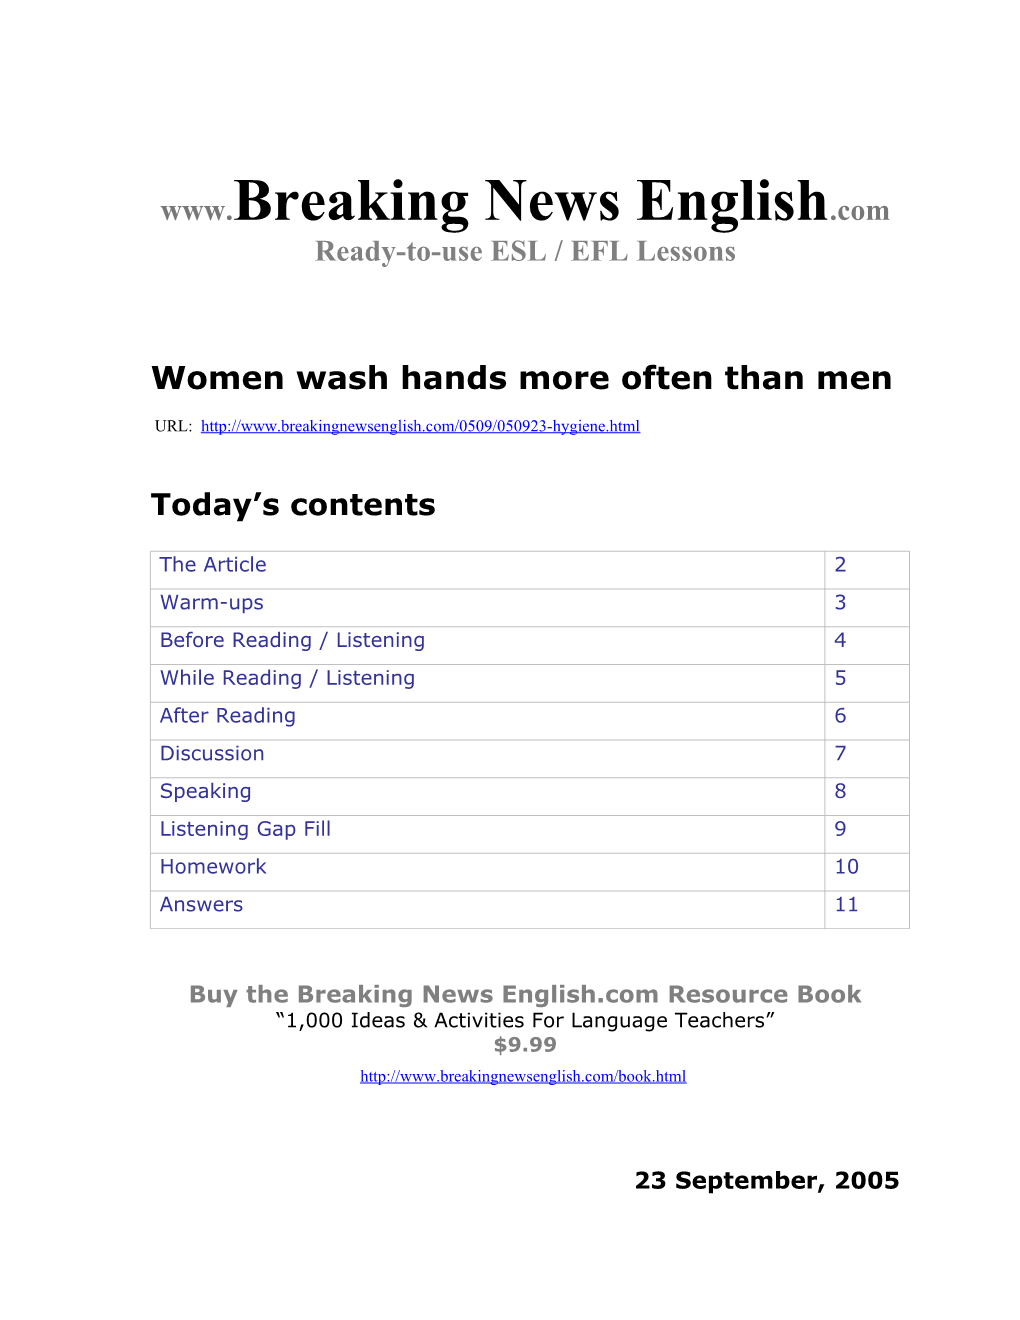 Women Wash Hands More Often Than Men